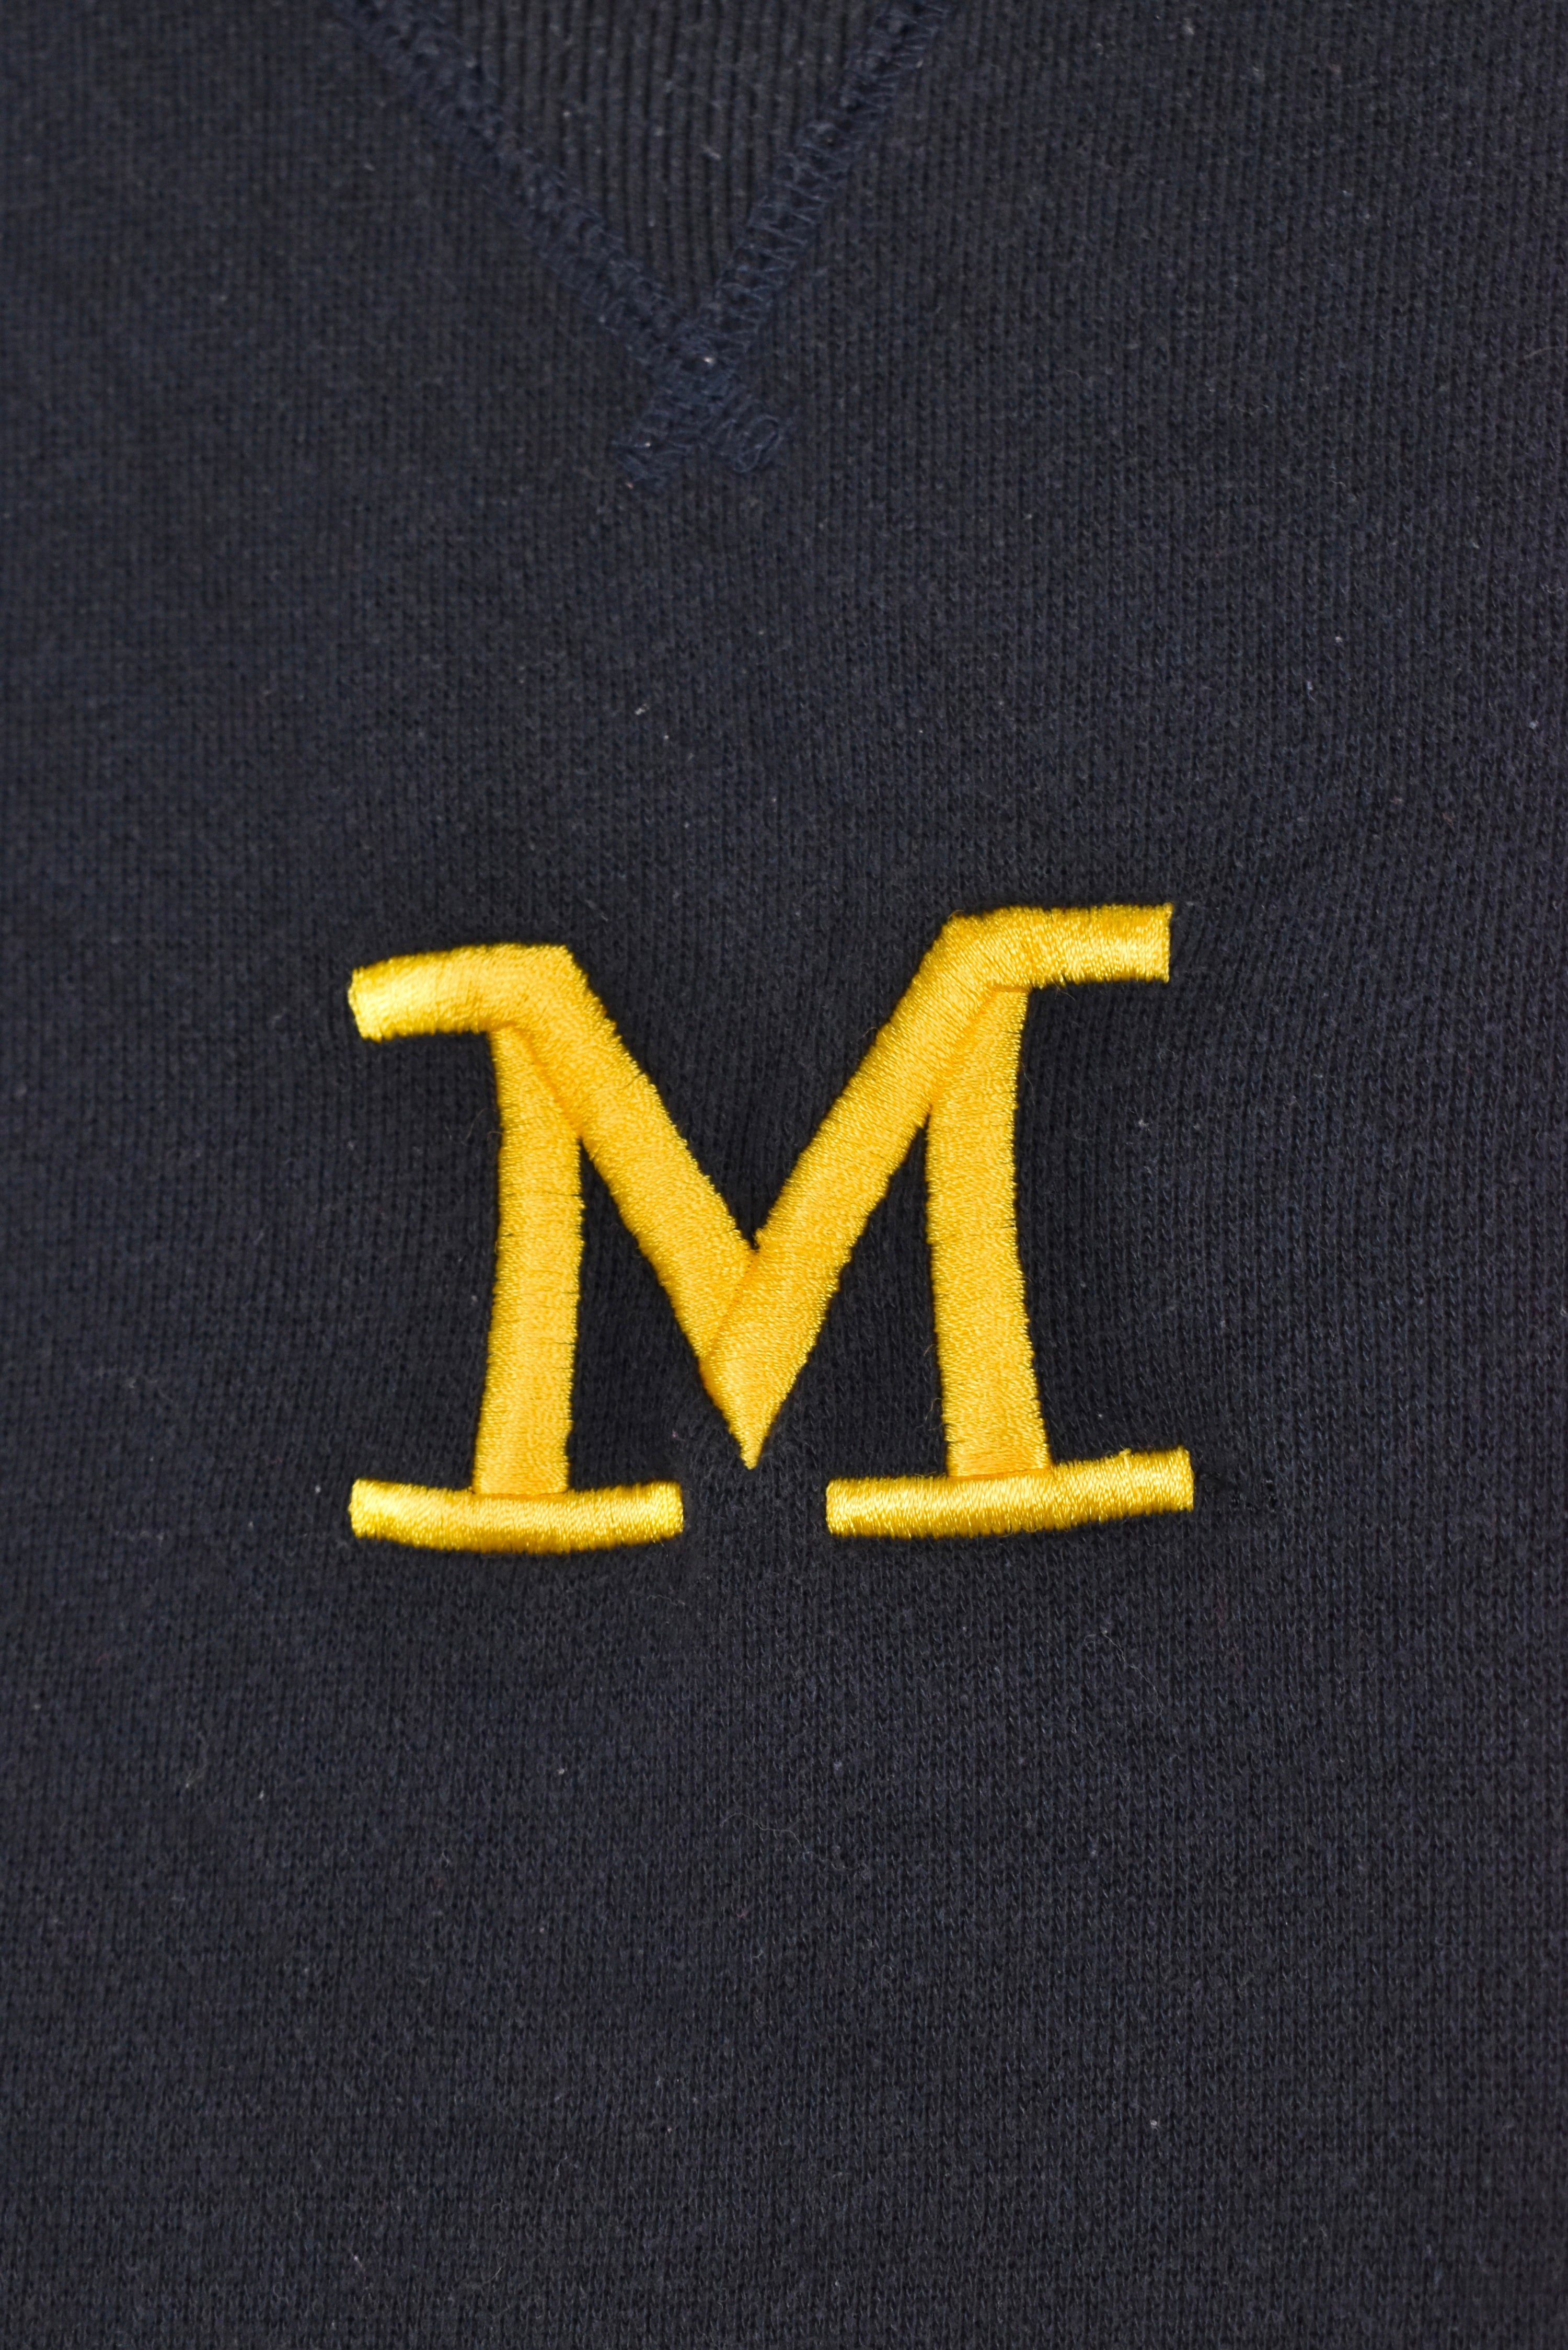 Vintage University of Michigan sweatshirt, black embroidered crewneck - AU L COLLEGE